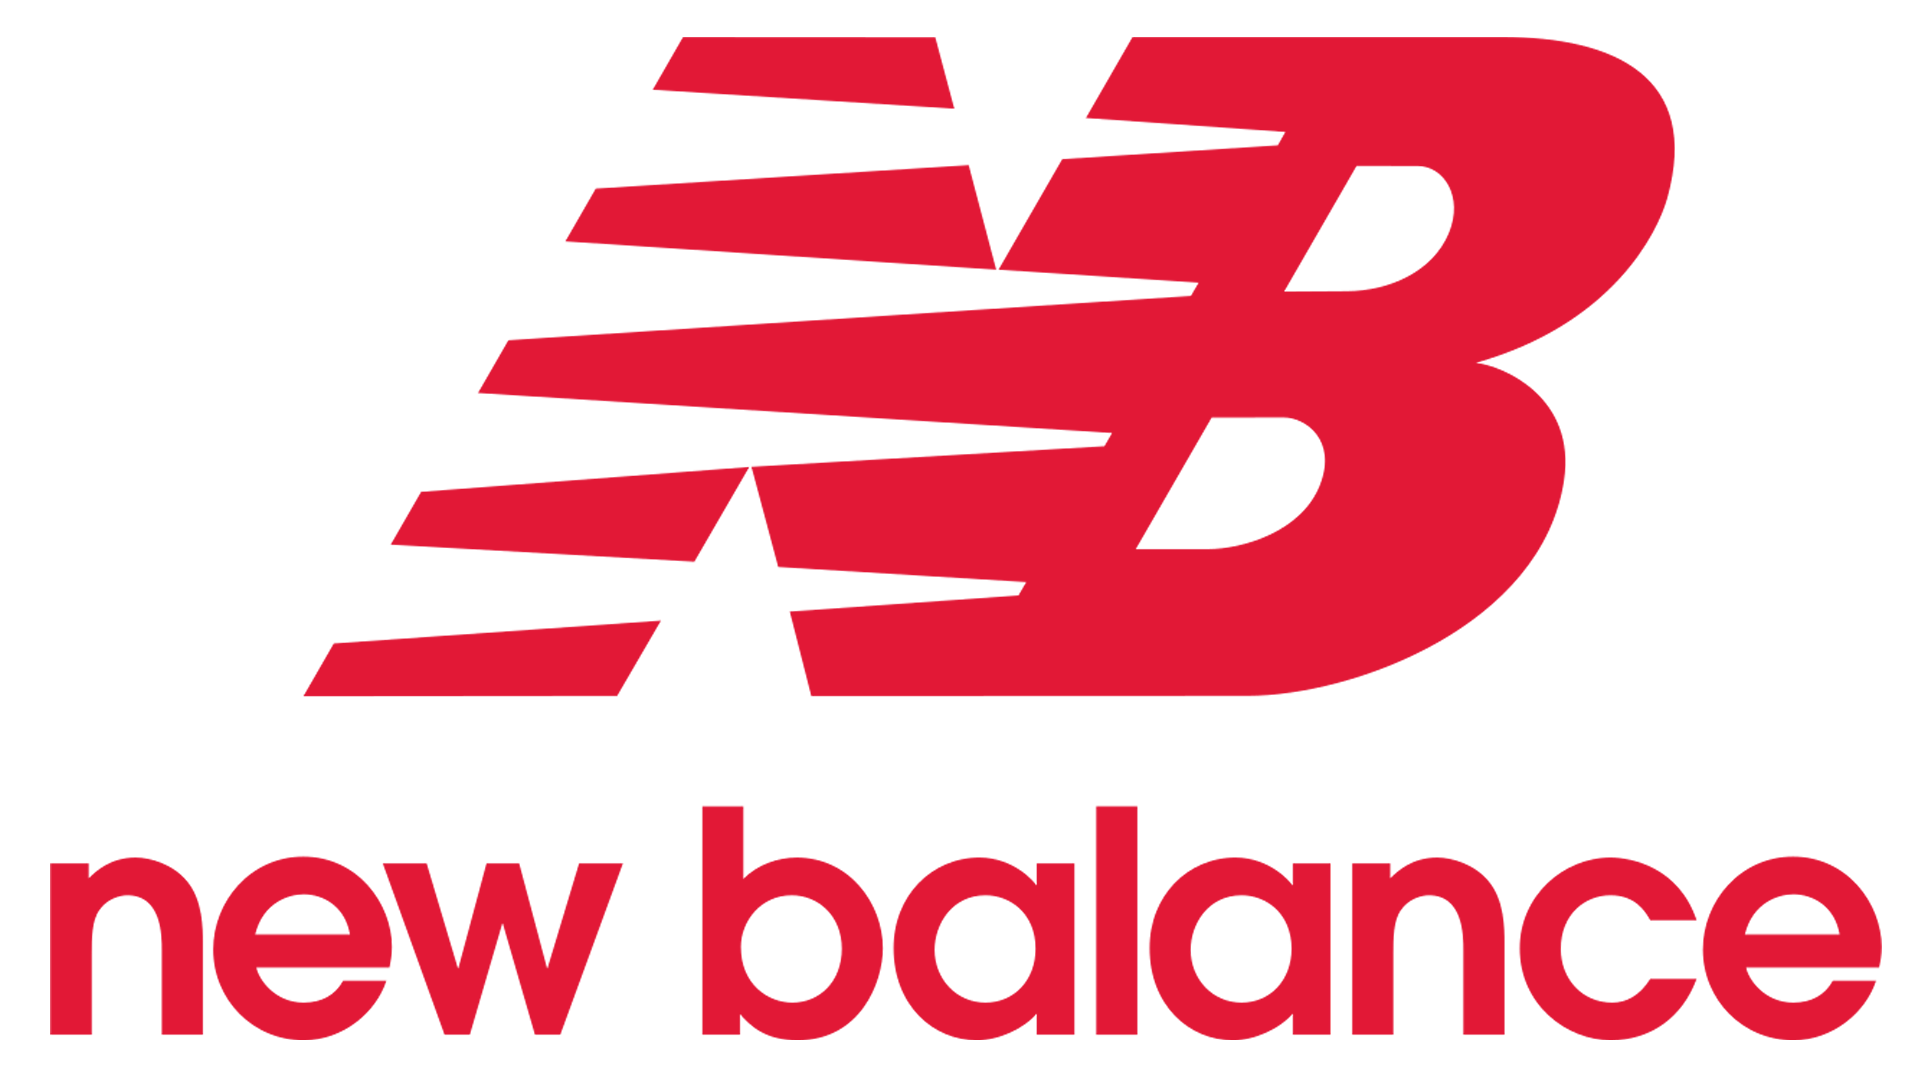 New-Balance-Logo